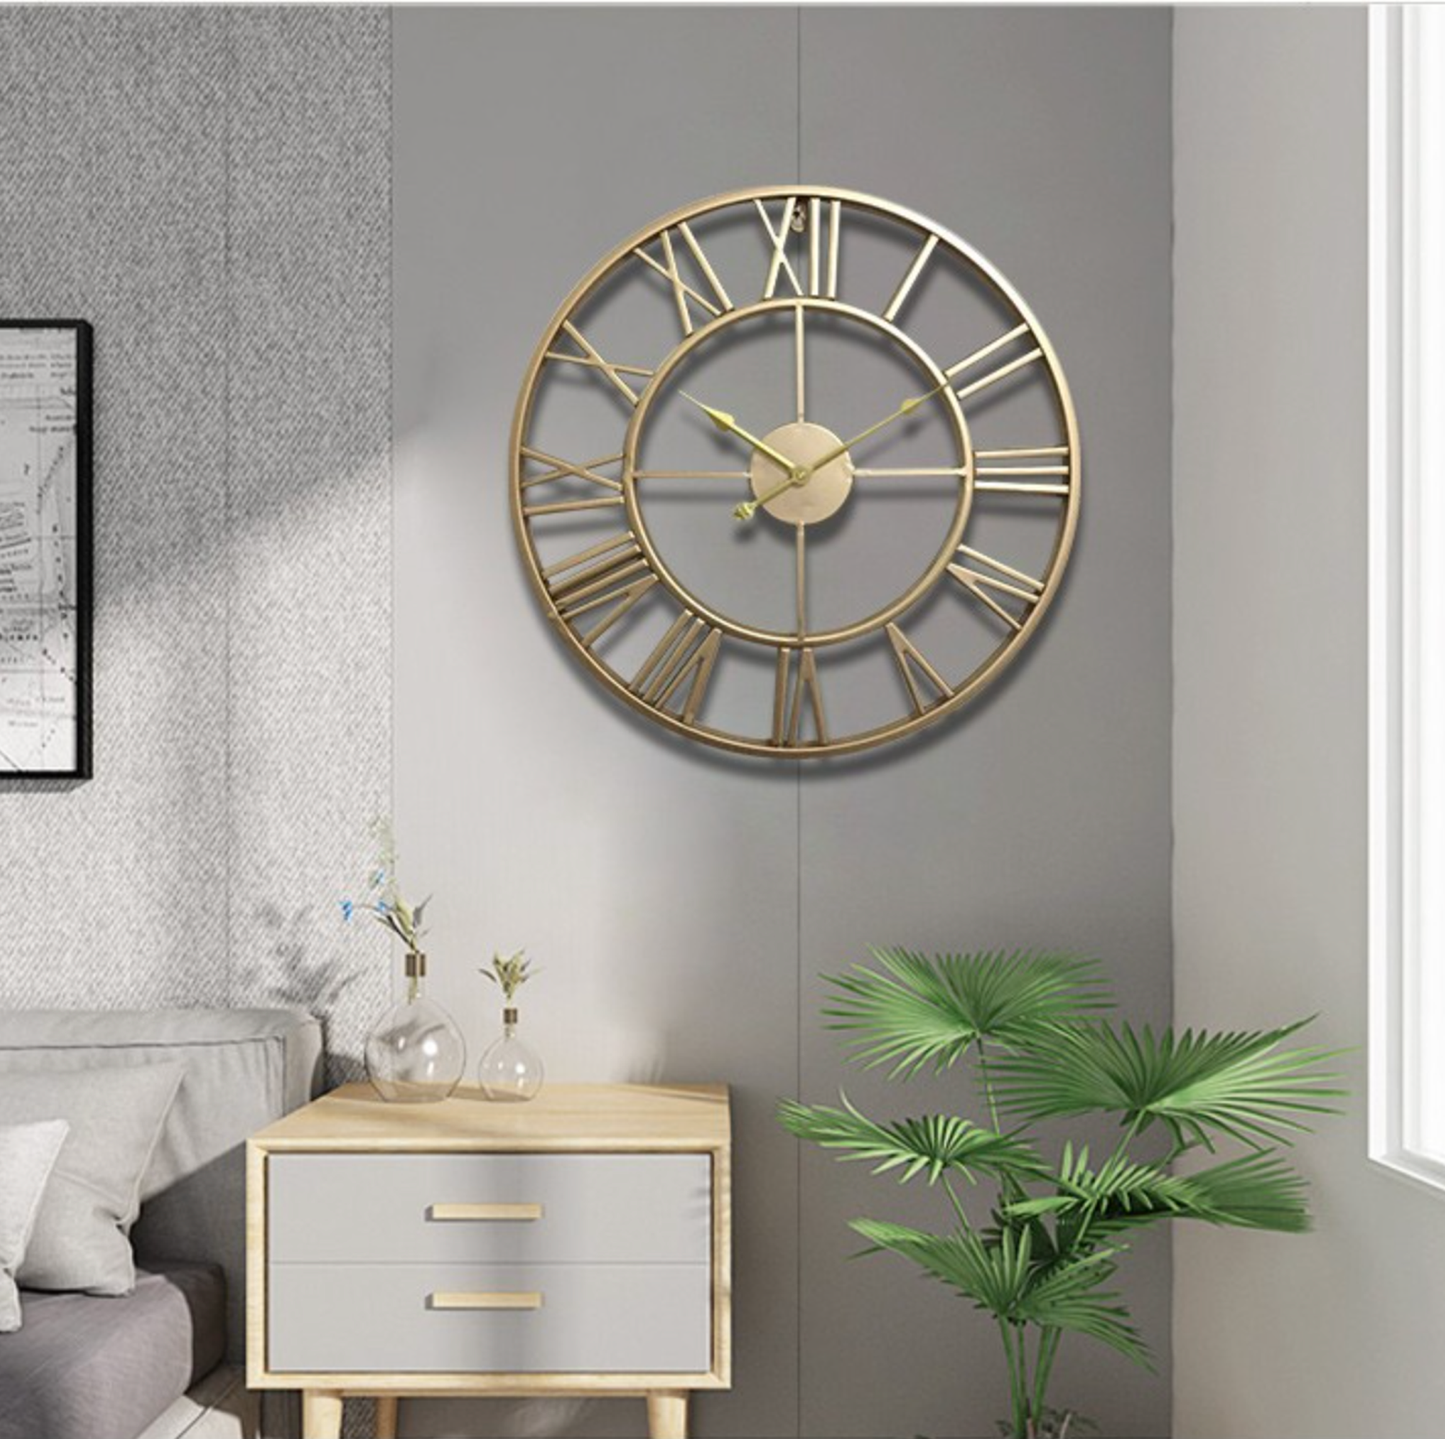 Gold or Bronze Skeleton Wall Clock